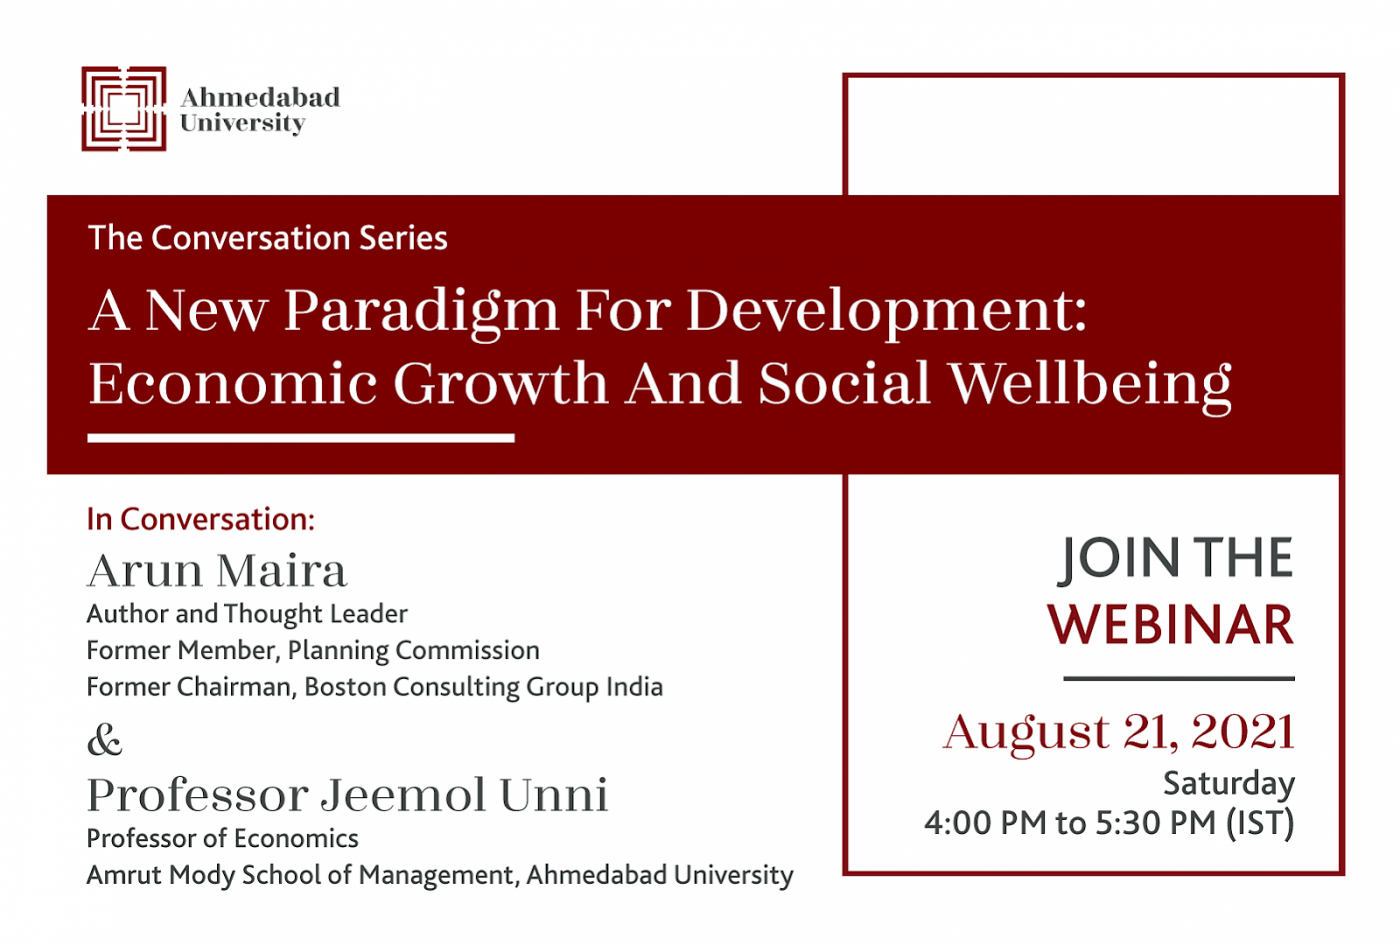 The Conversation Series: A New Paradigm for Development: Economic